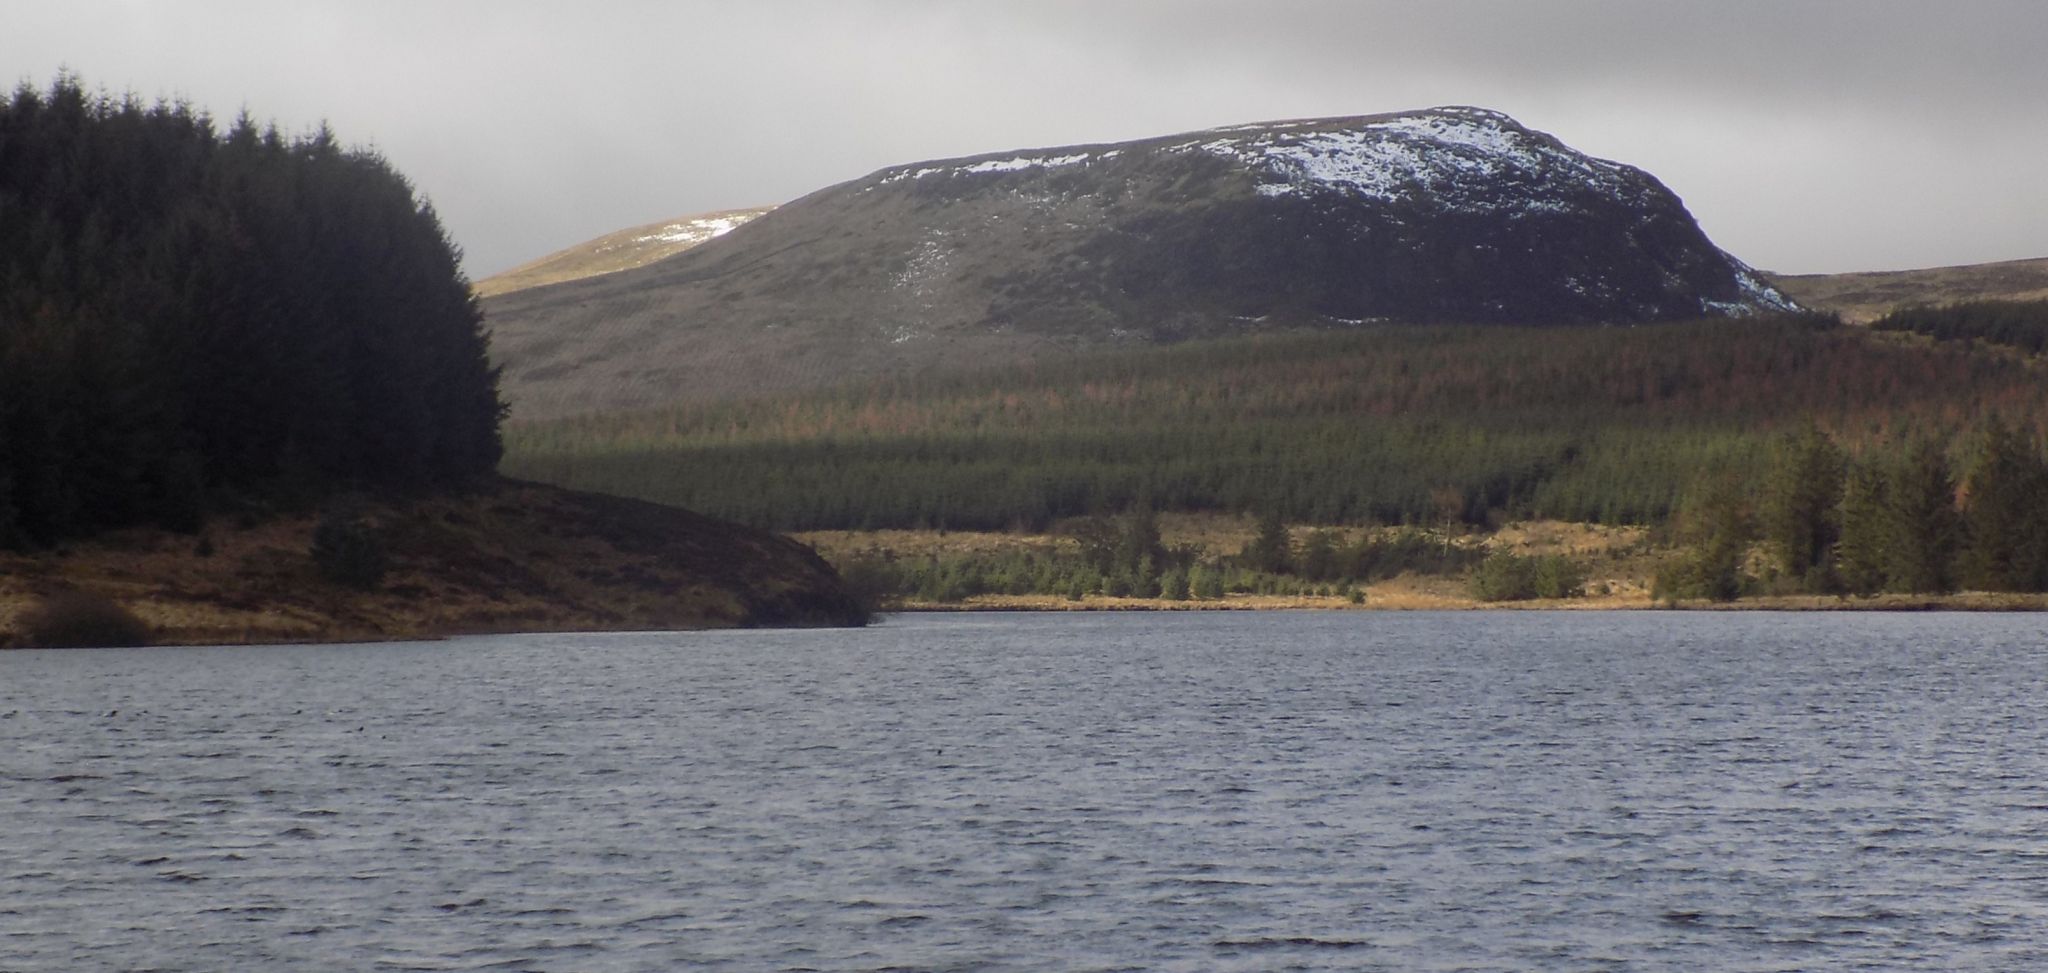 Thief's Hill in the Kilpatrick Hills across Kilmannan Reservoir